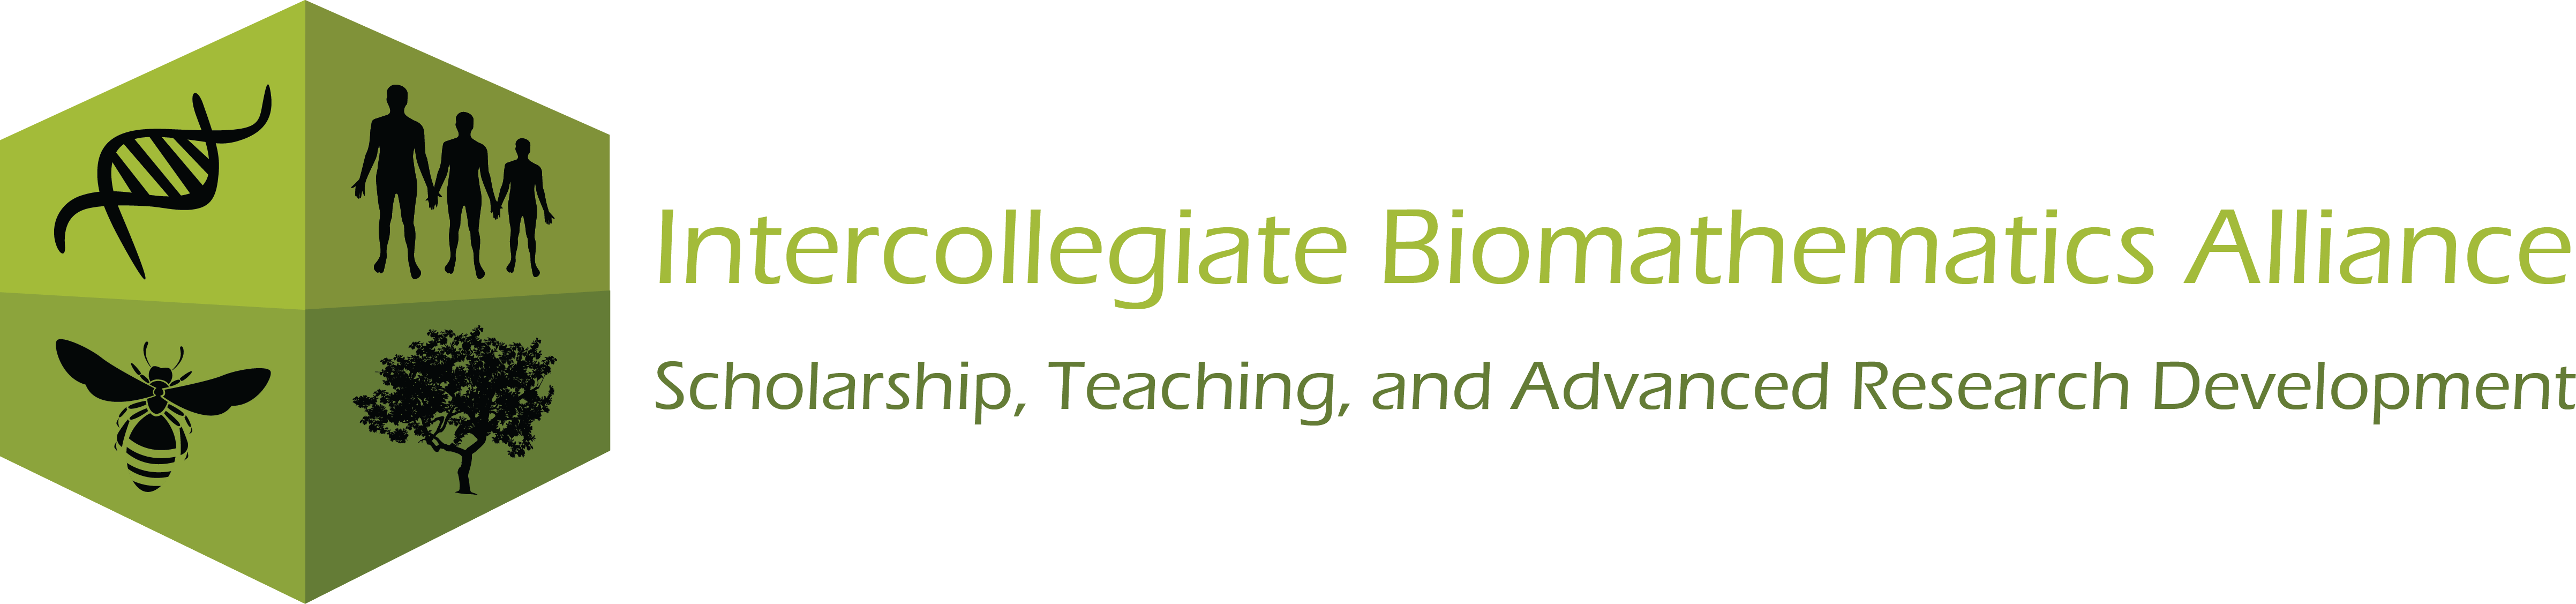 Intercollegiate Biomathematics Alliance